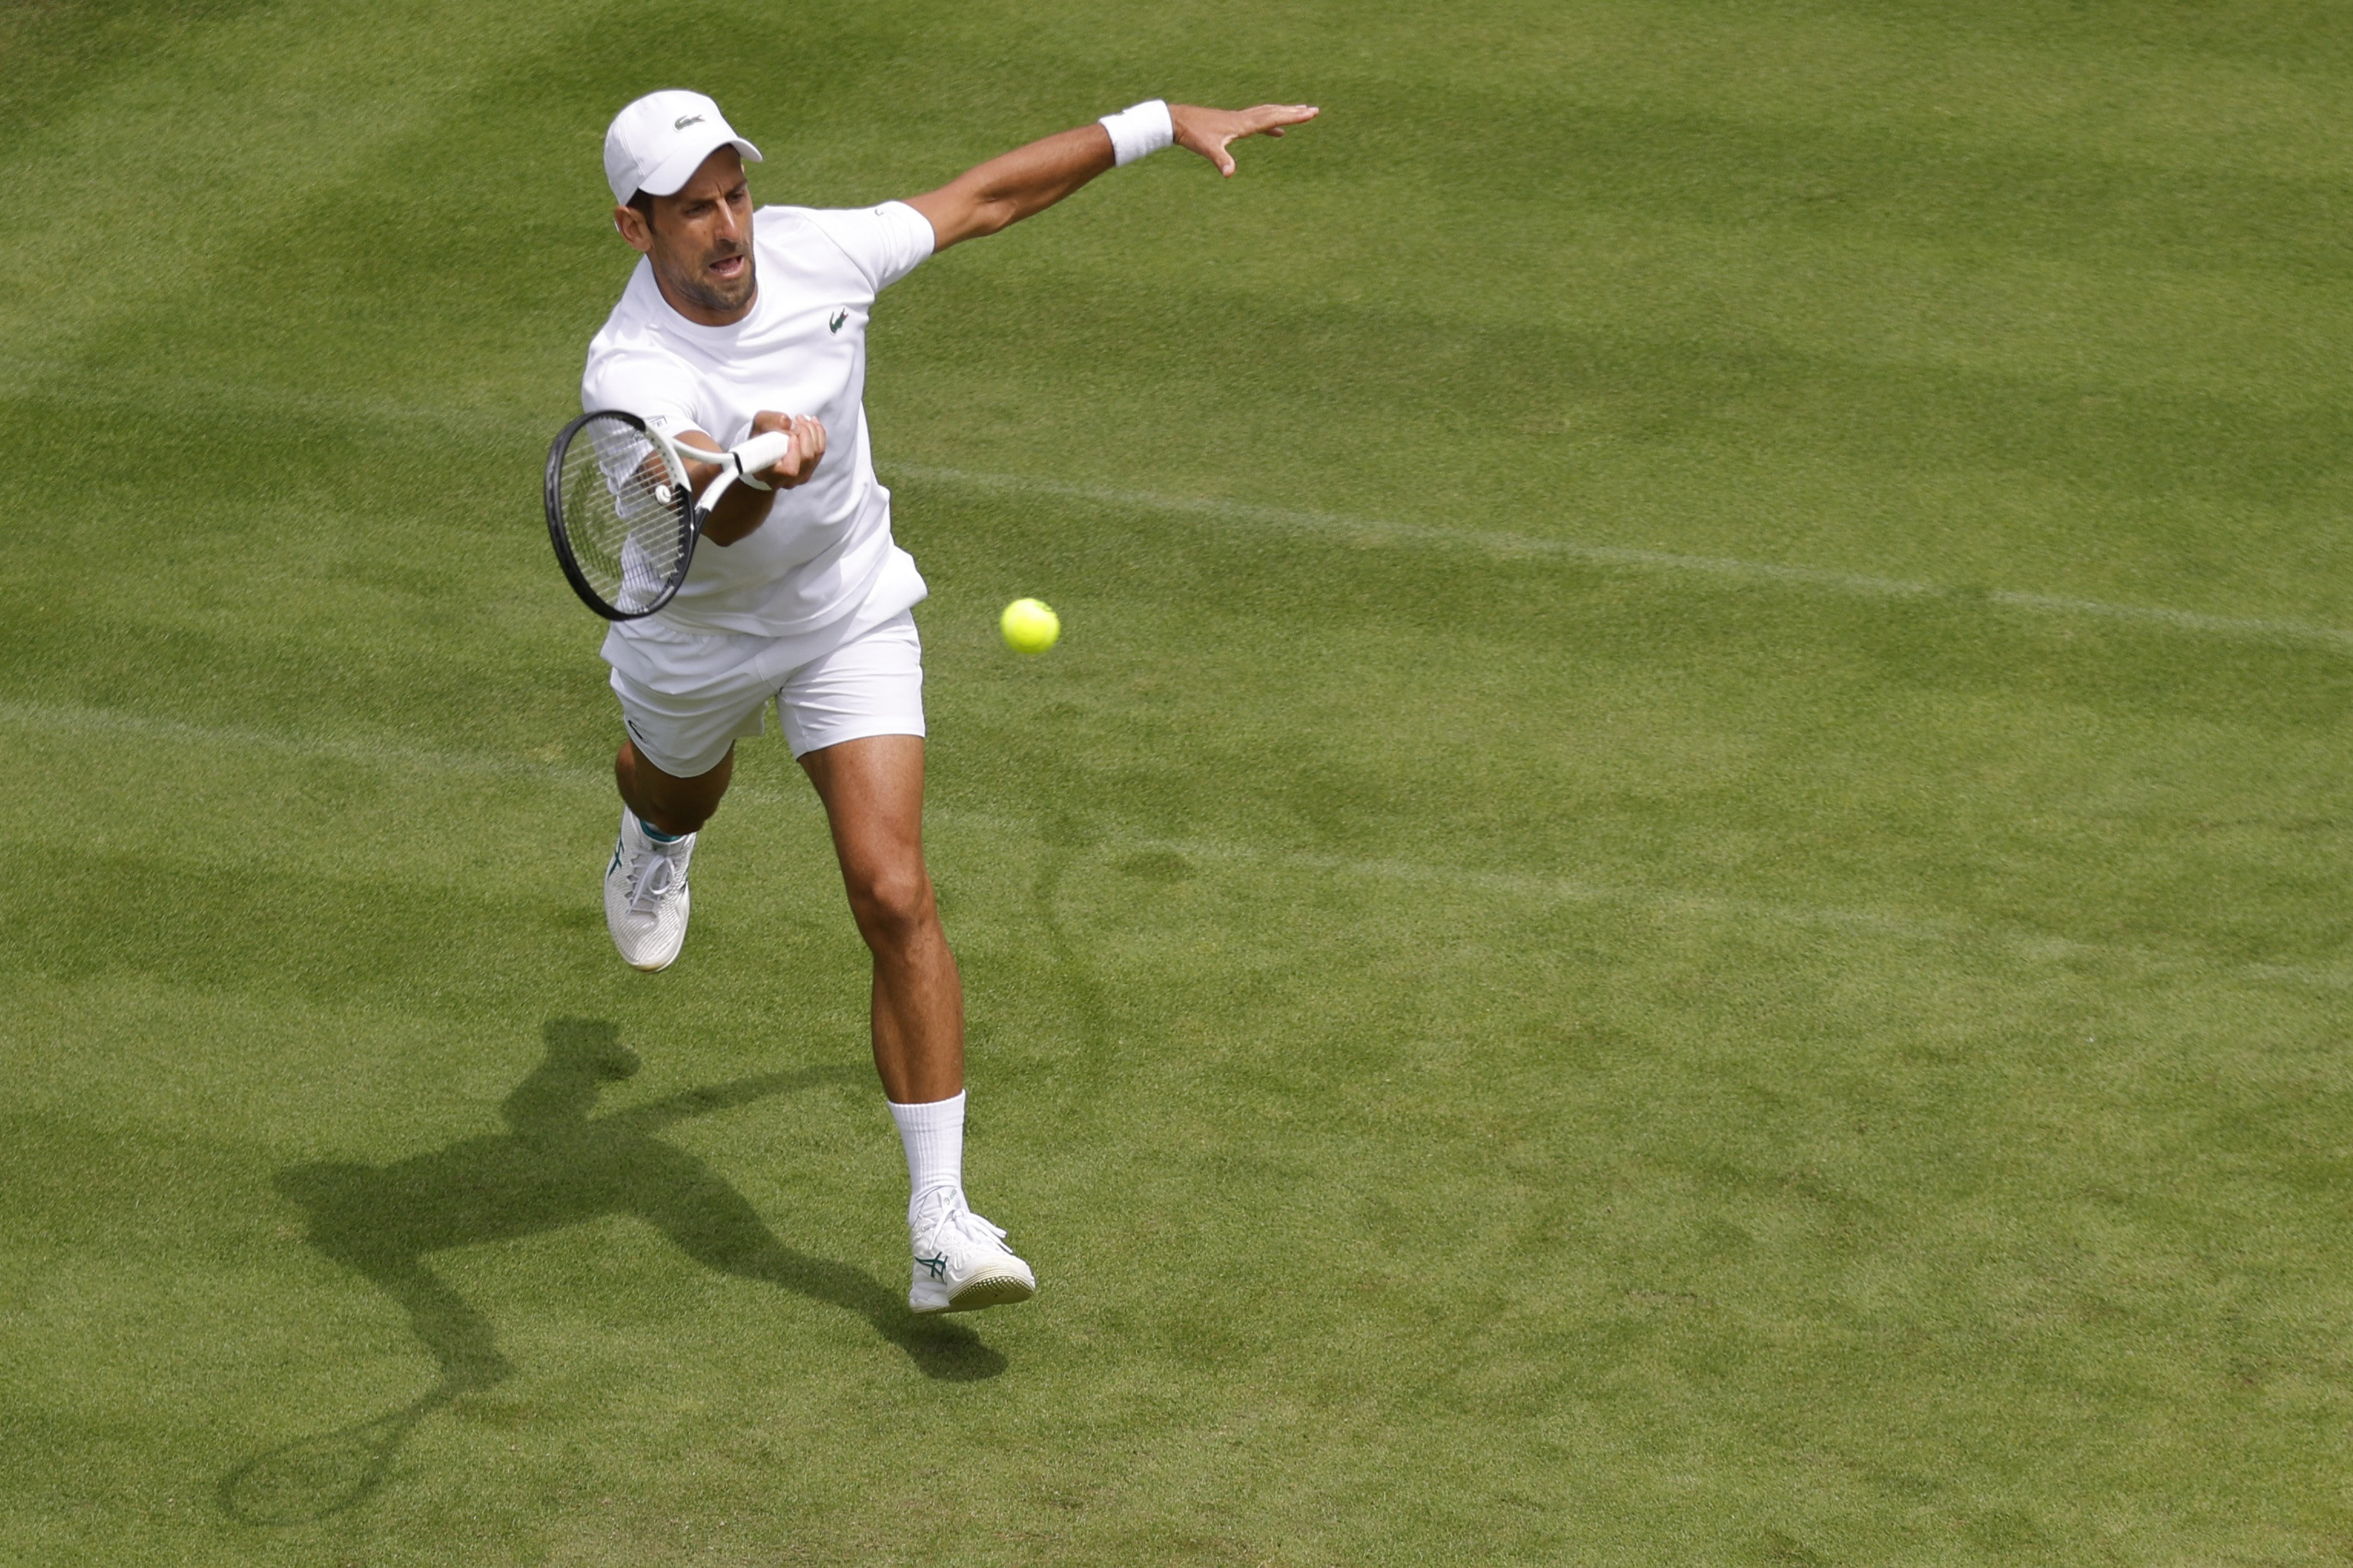 Daniil Medvedev makes Novak Djokovic's French Open a little harder